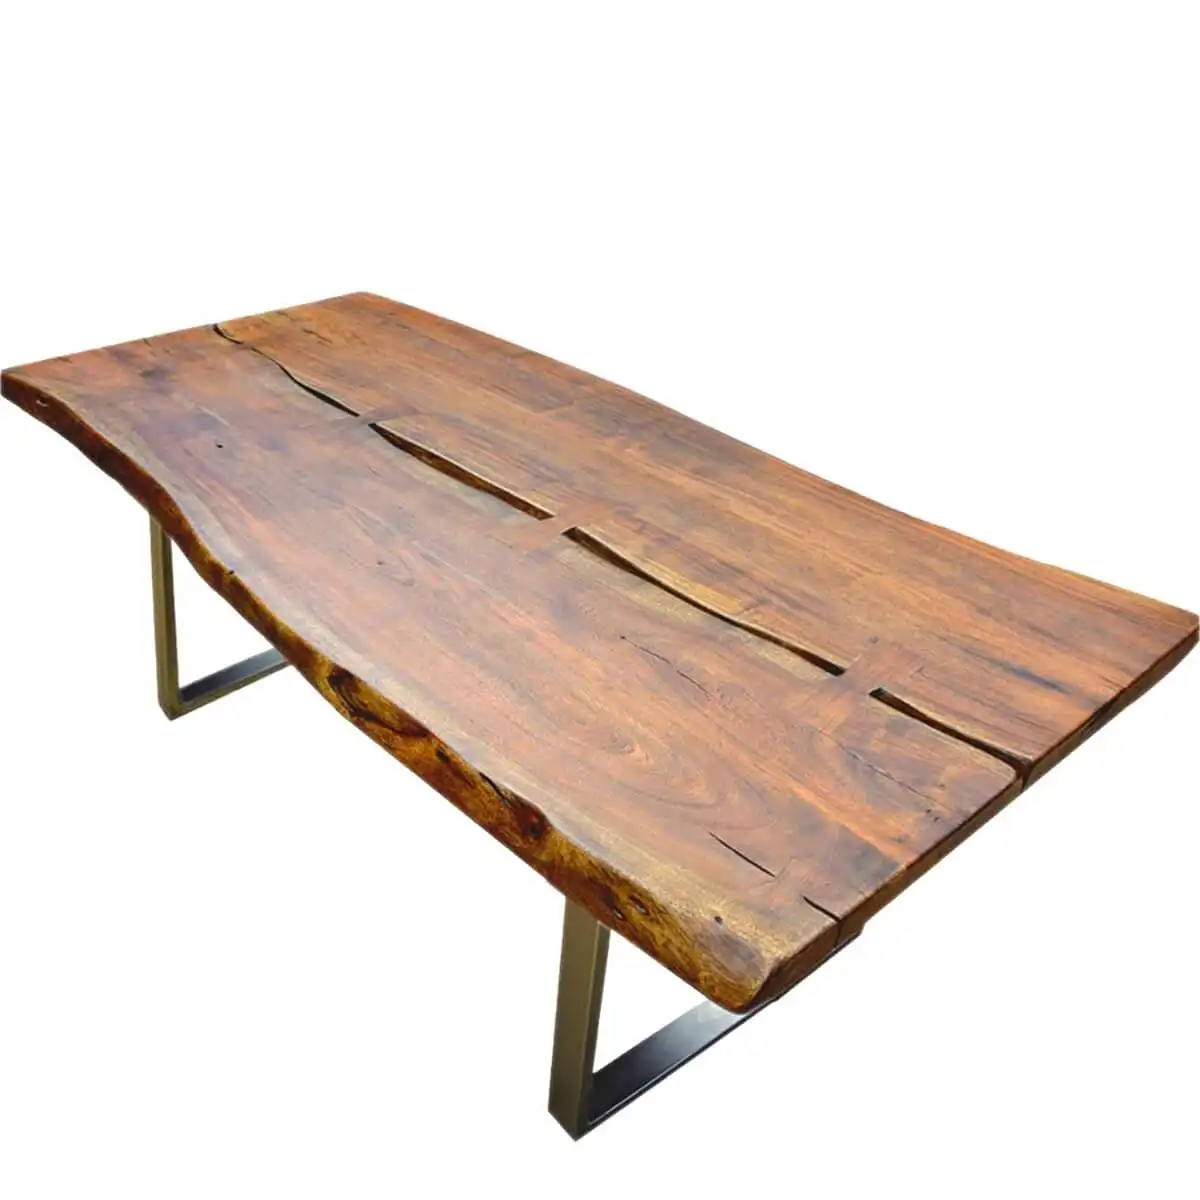 Mesa de comedor con borde vivo, mesa de comedor mesa de madera con borde vivo